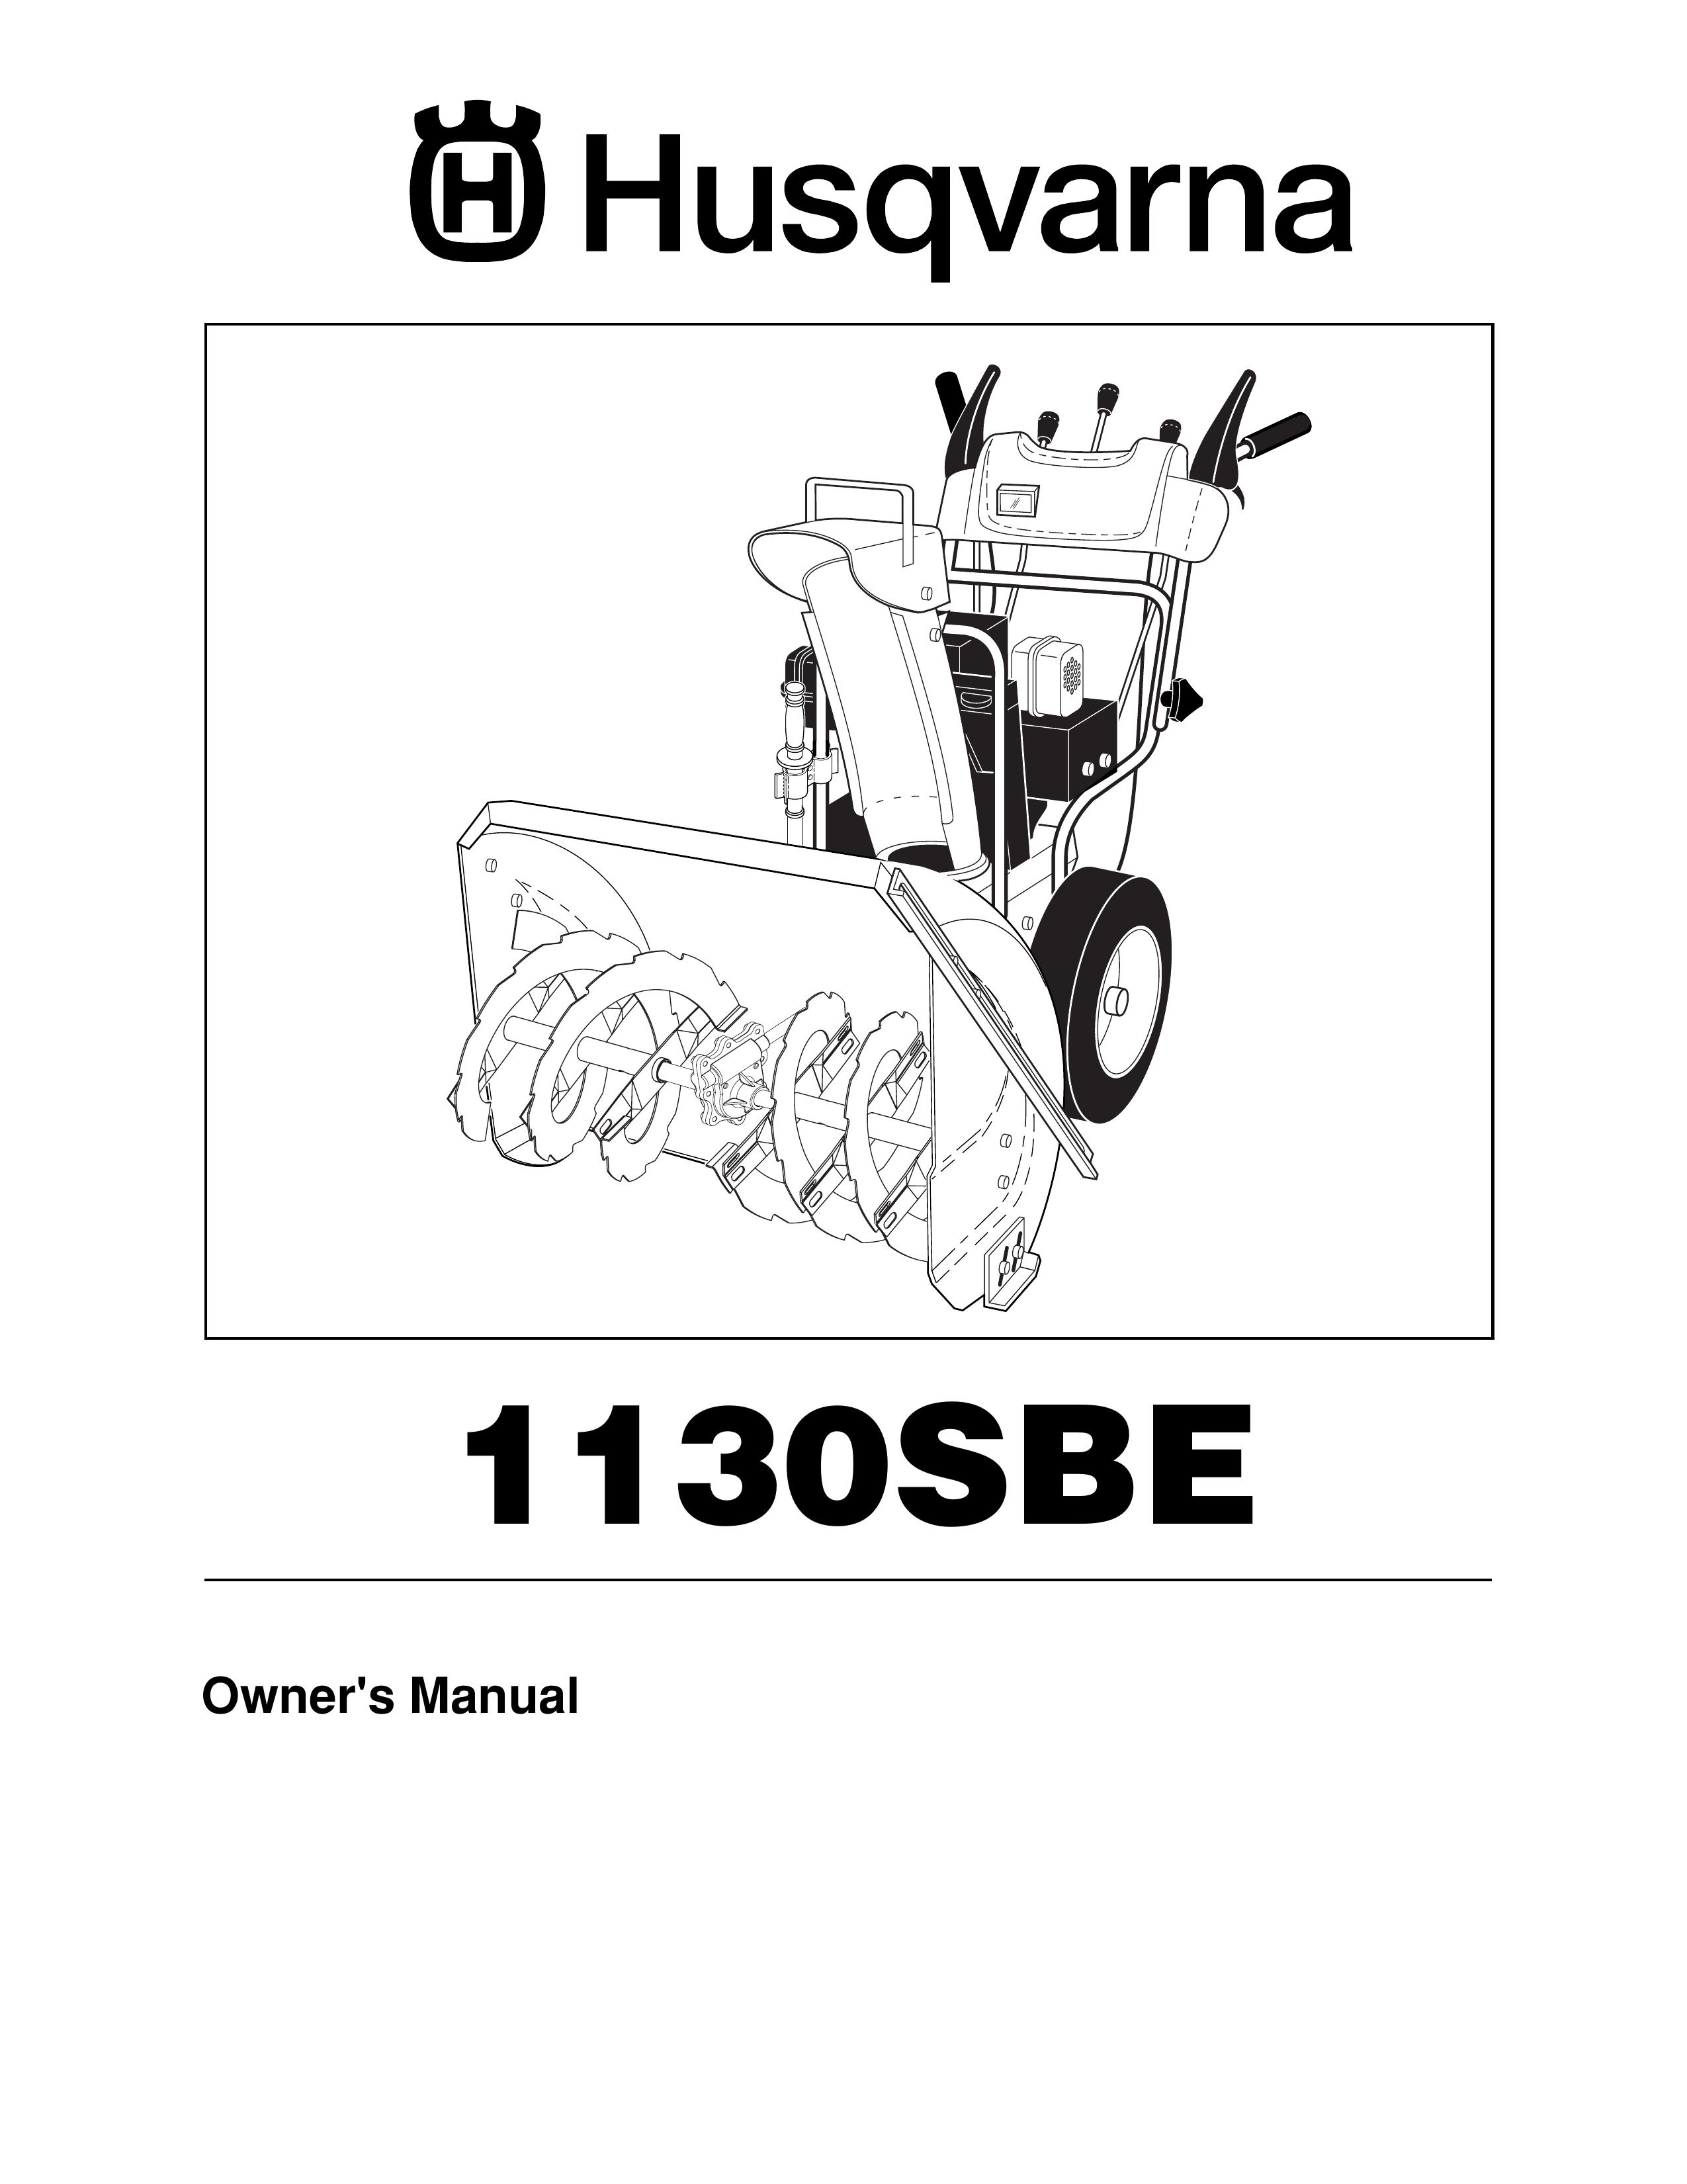 Husqvarna 1130SBE Snow Blower User Manual